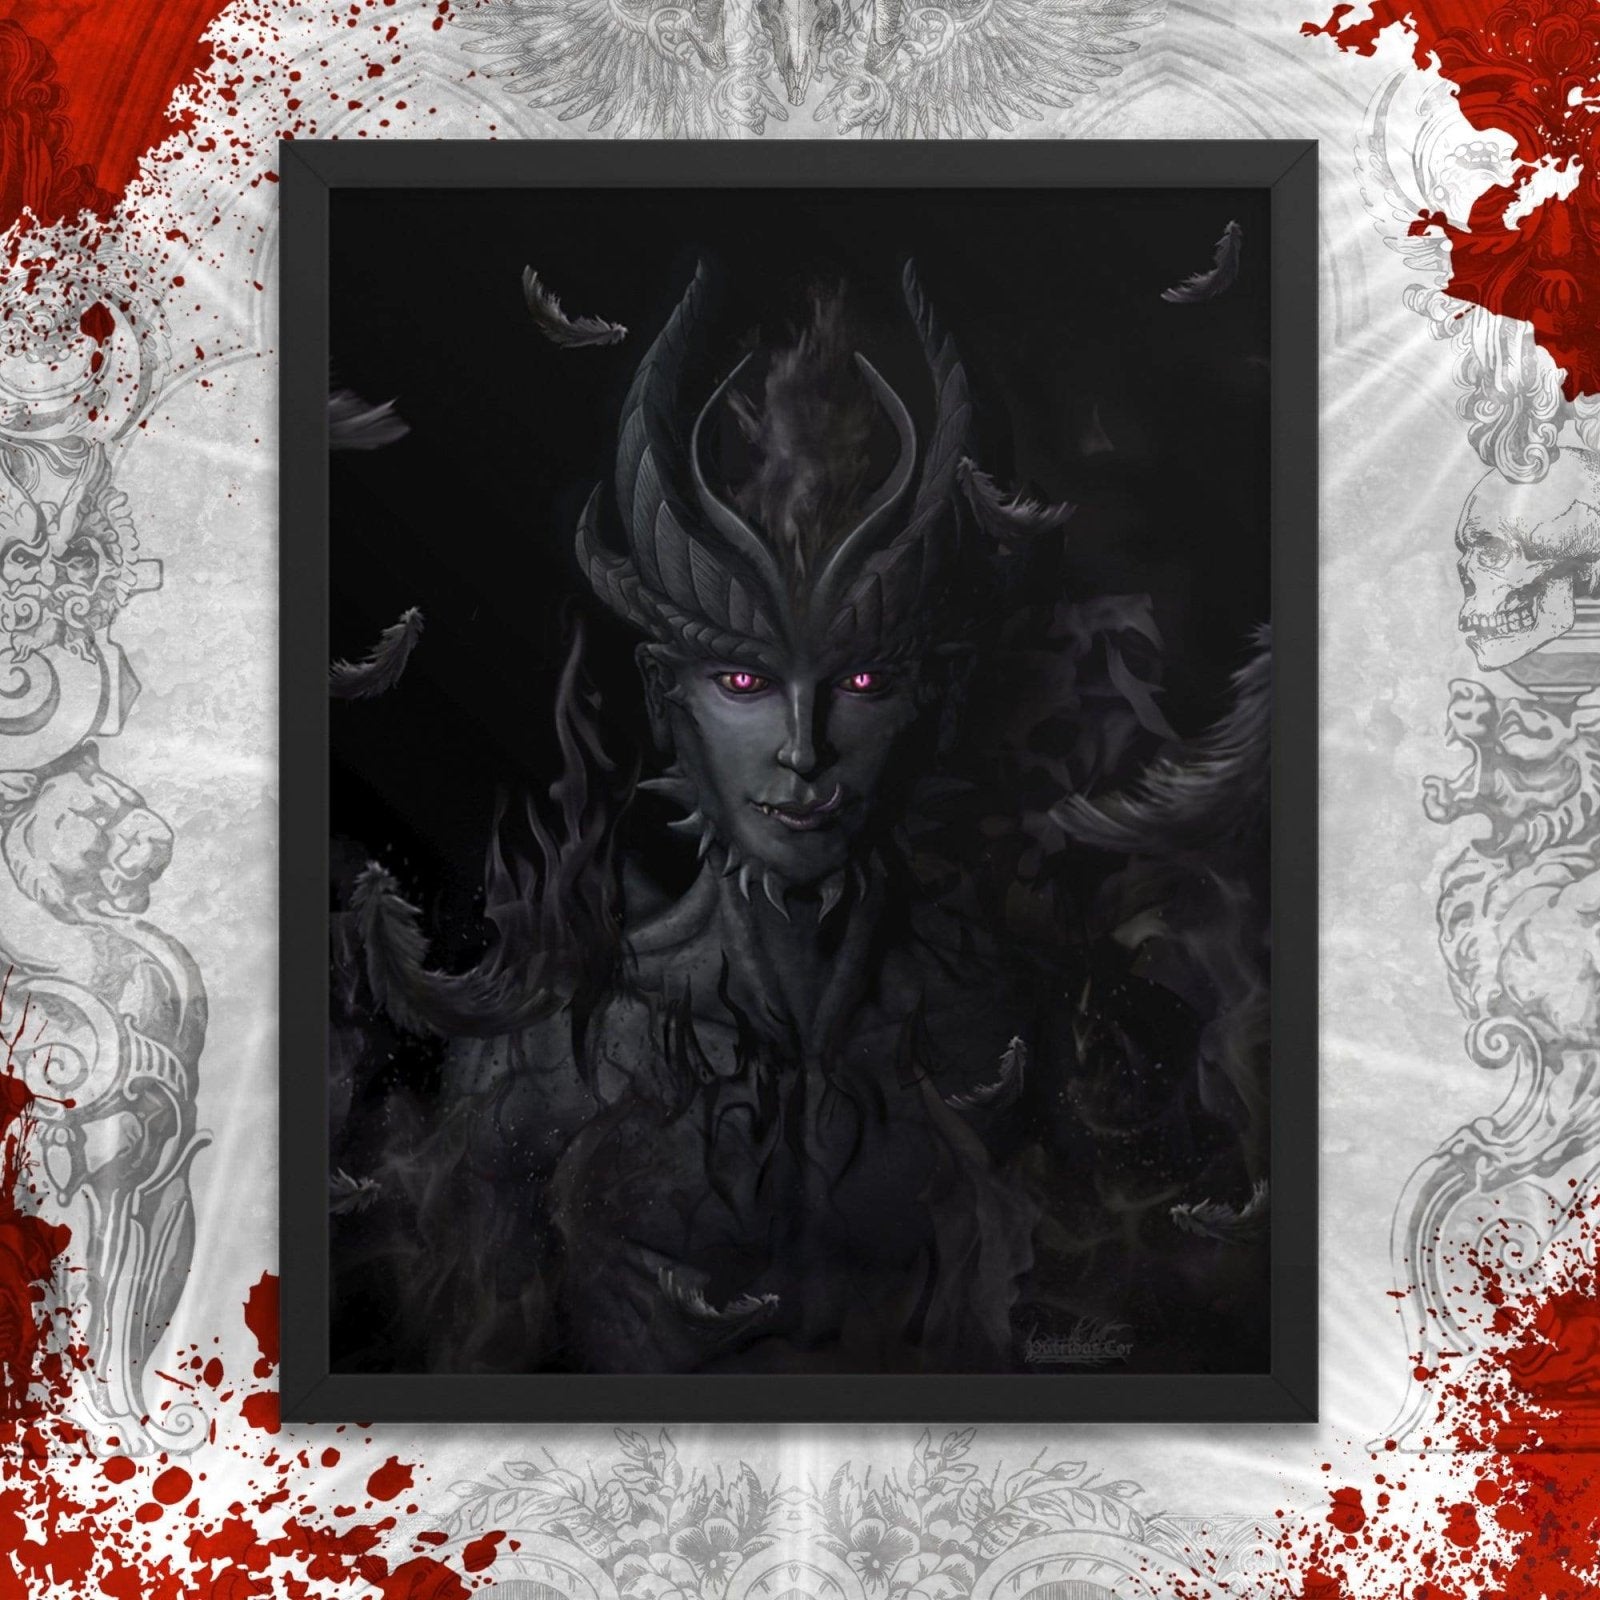 Demon Poster, Game Room Wall Art Print, Satanic, Goth Home Decor, Matte or Photo Paper - Black Devil - Abysm Internal